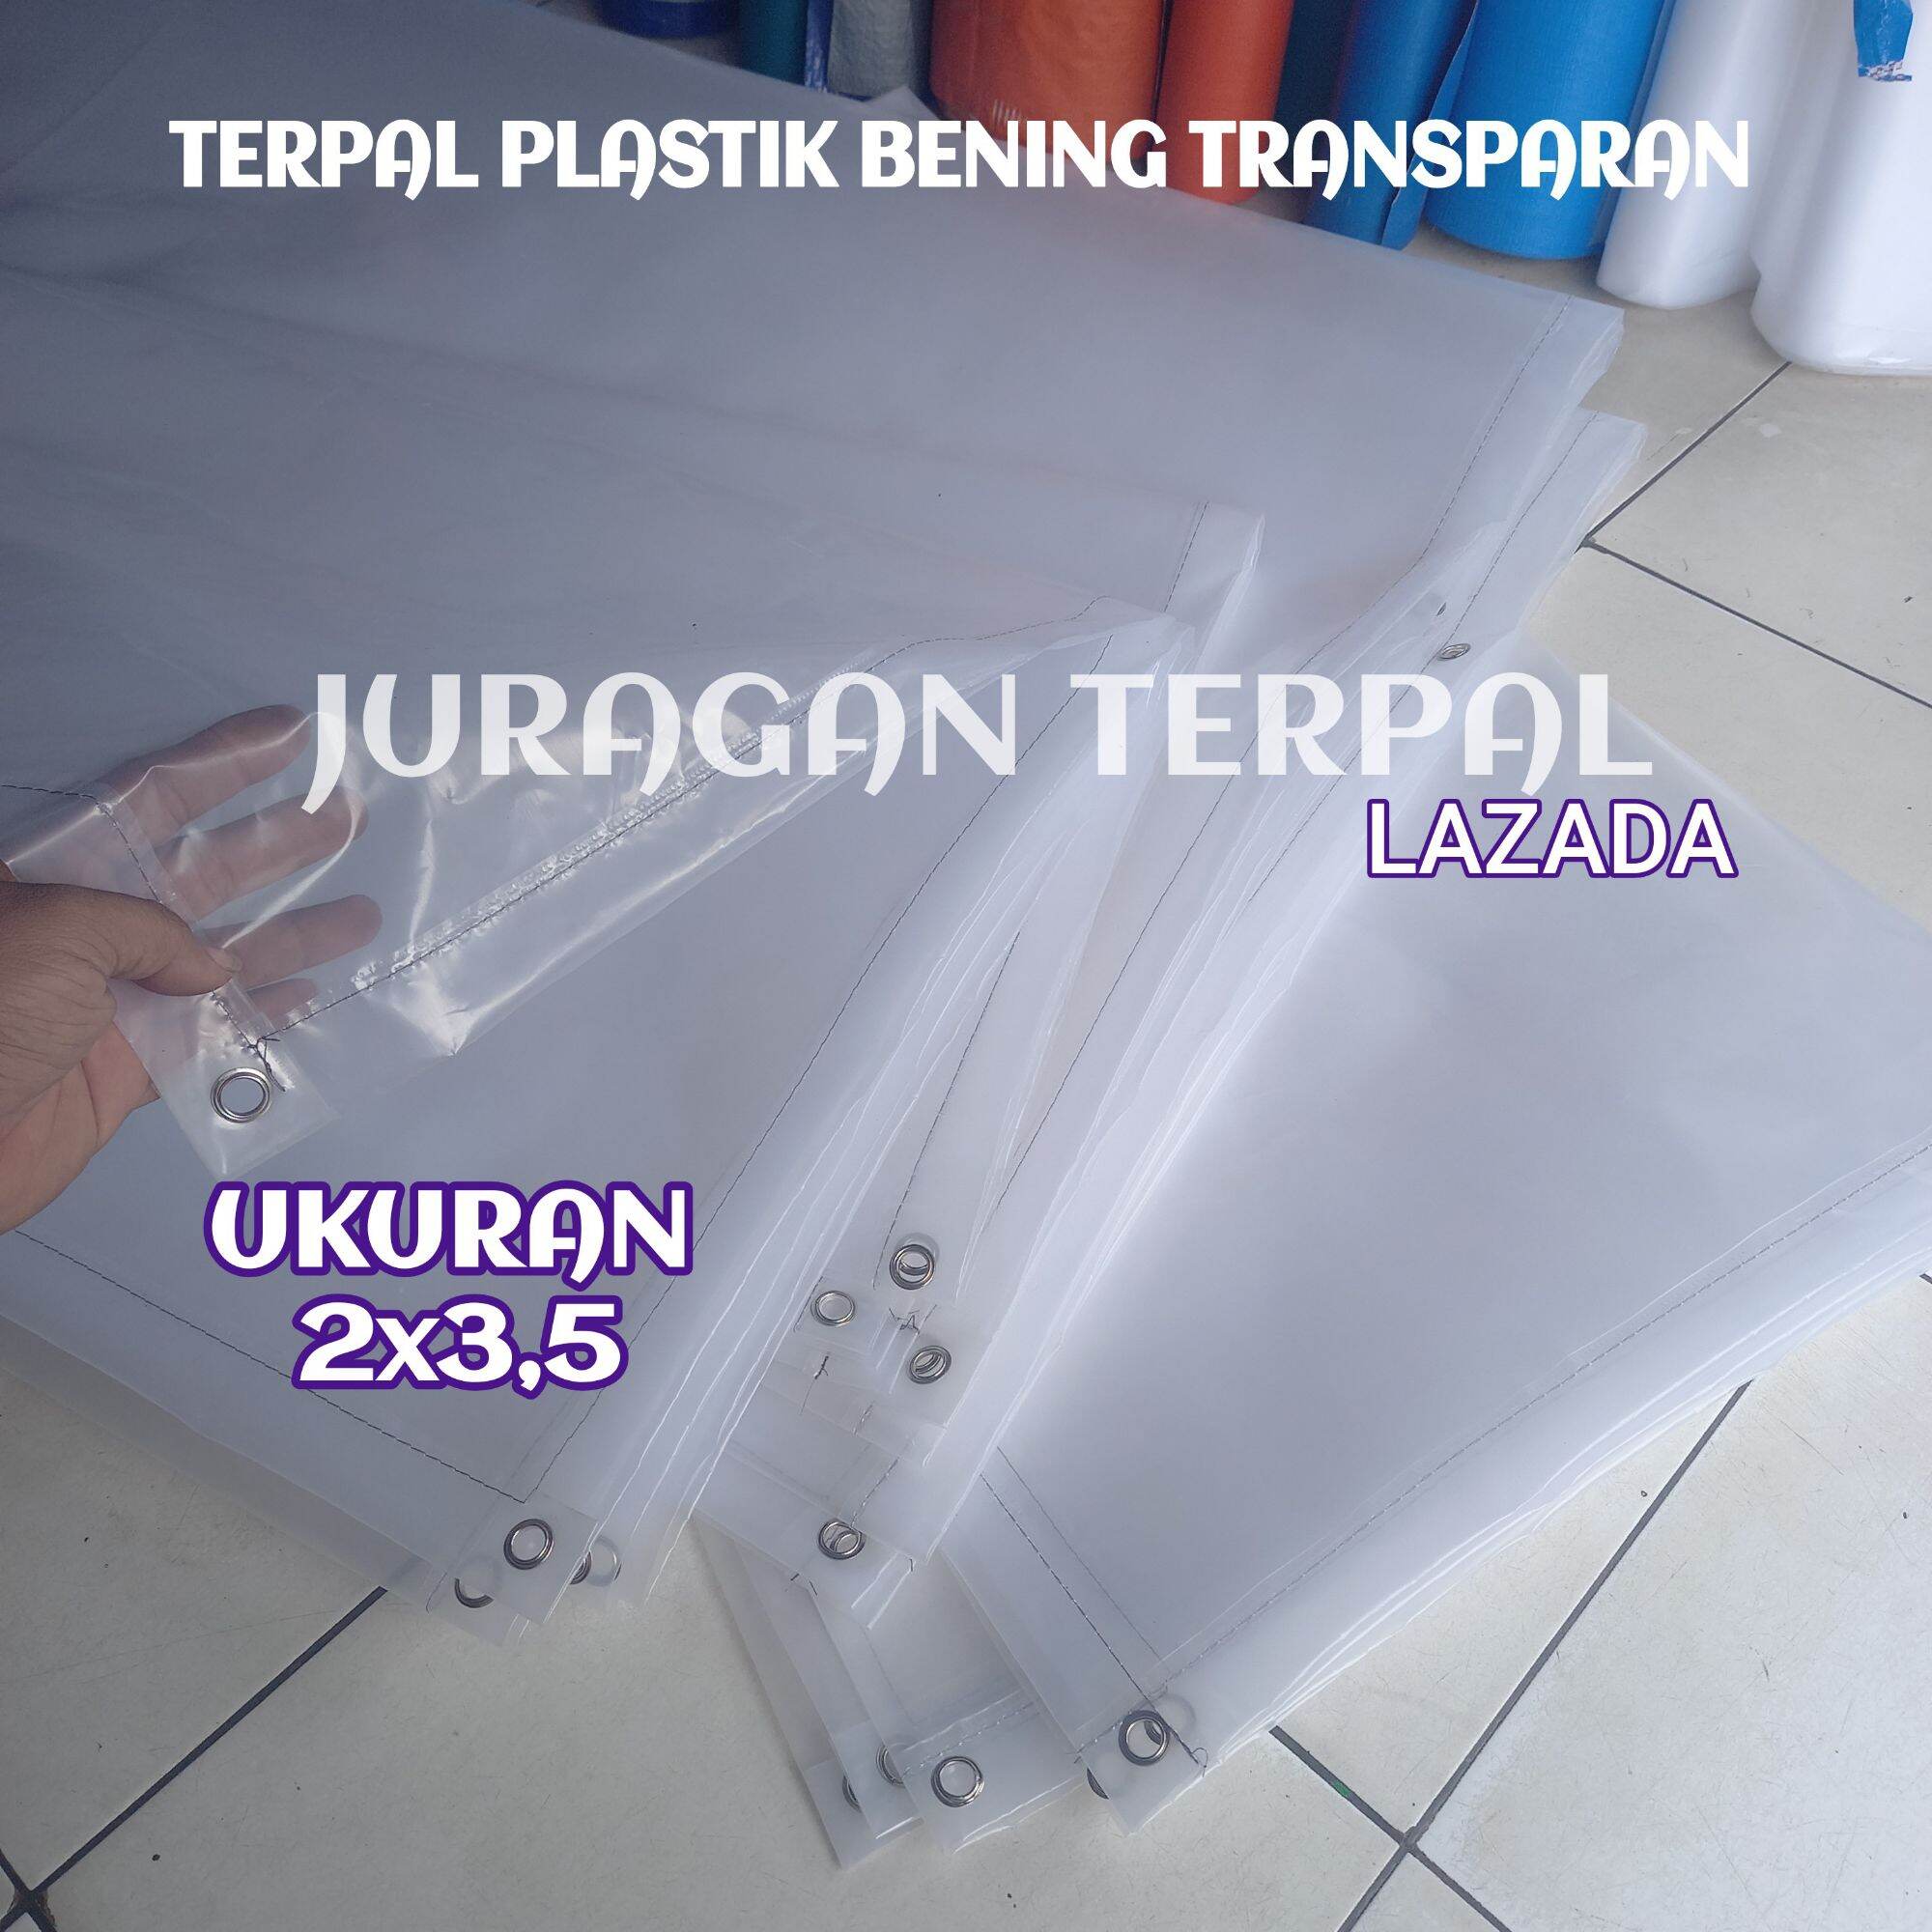 Terpal Plastik Bening Transparan Ukuran 2x35 Lazada Indonesia 4368